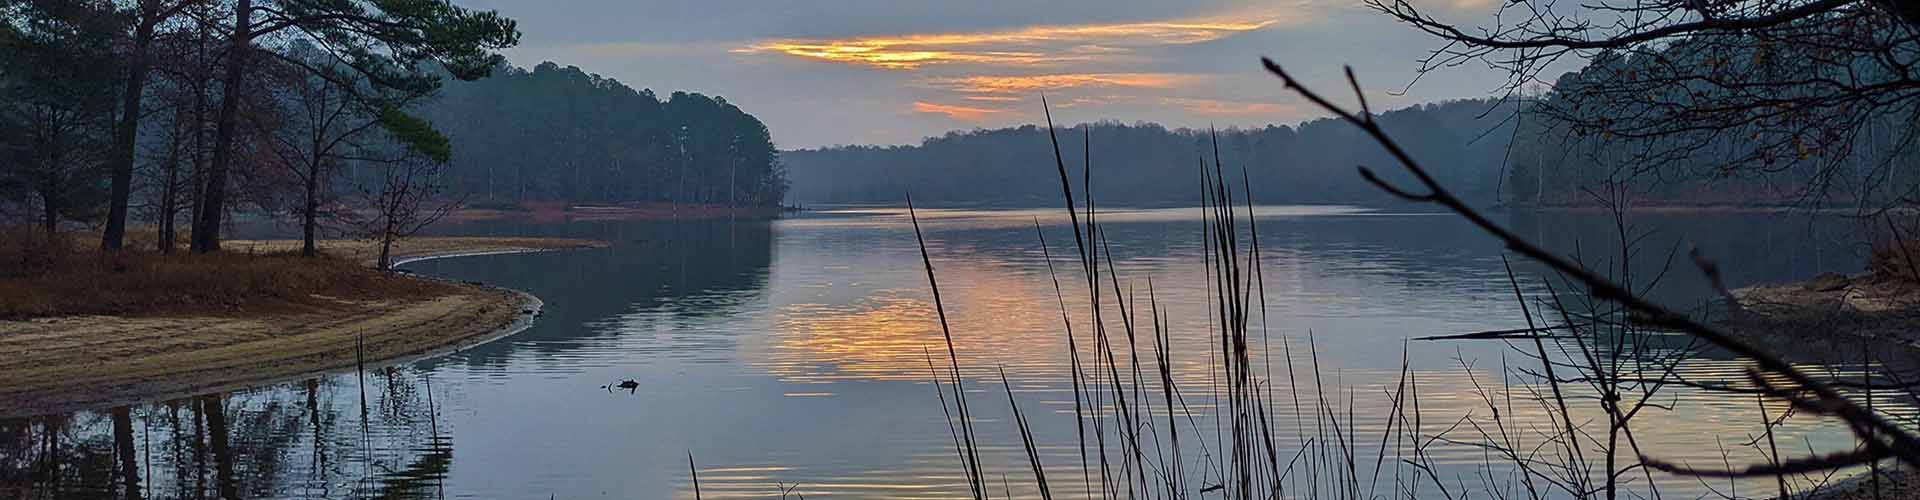 Falls Lake, North Carolina Morrisville